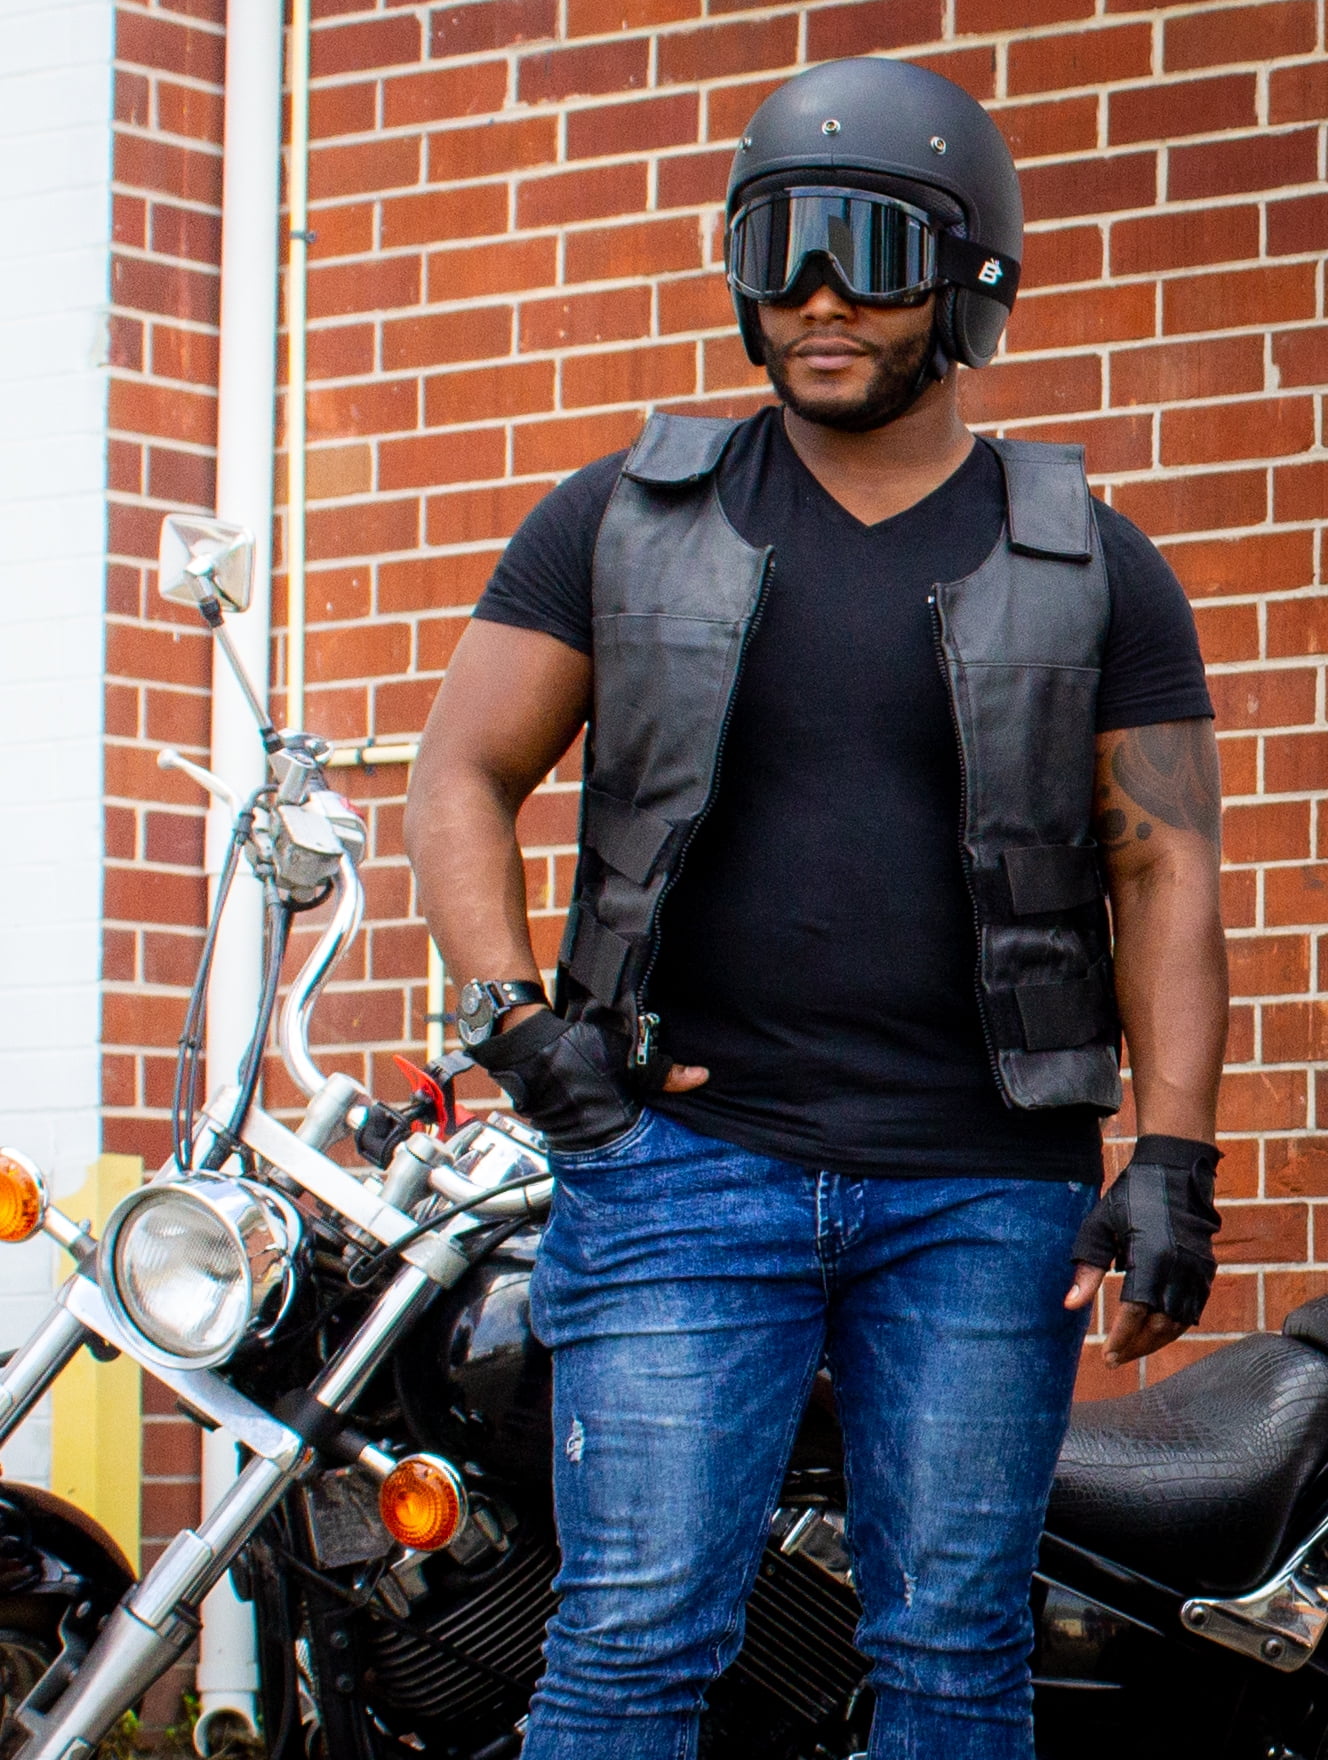 Birdz Vulture Padded Motorcycle Safety Goggles for Men Black Frame w/ Smoke Lens  Anti fog & Fits Over Glasses 